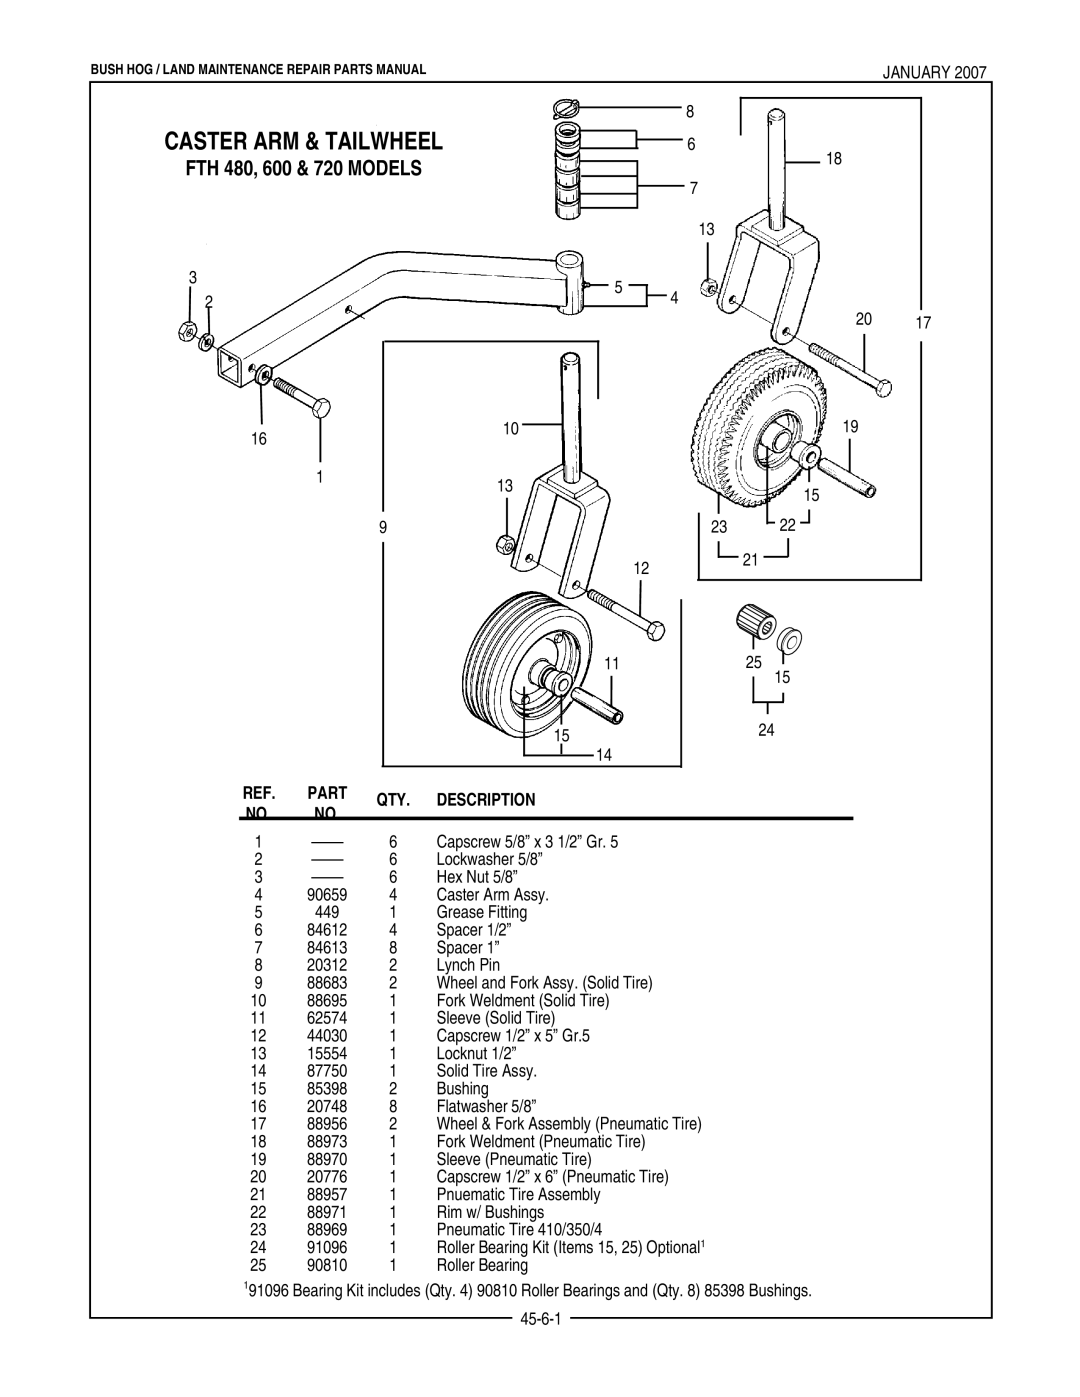 Bush Hog manual Caster Arm & Tailwheel, FTH 480, 600 & 720 MODELS, Part, Description, January 